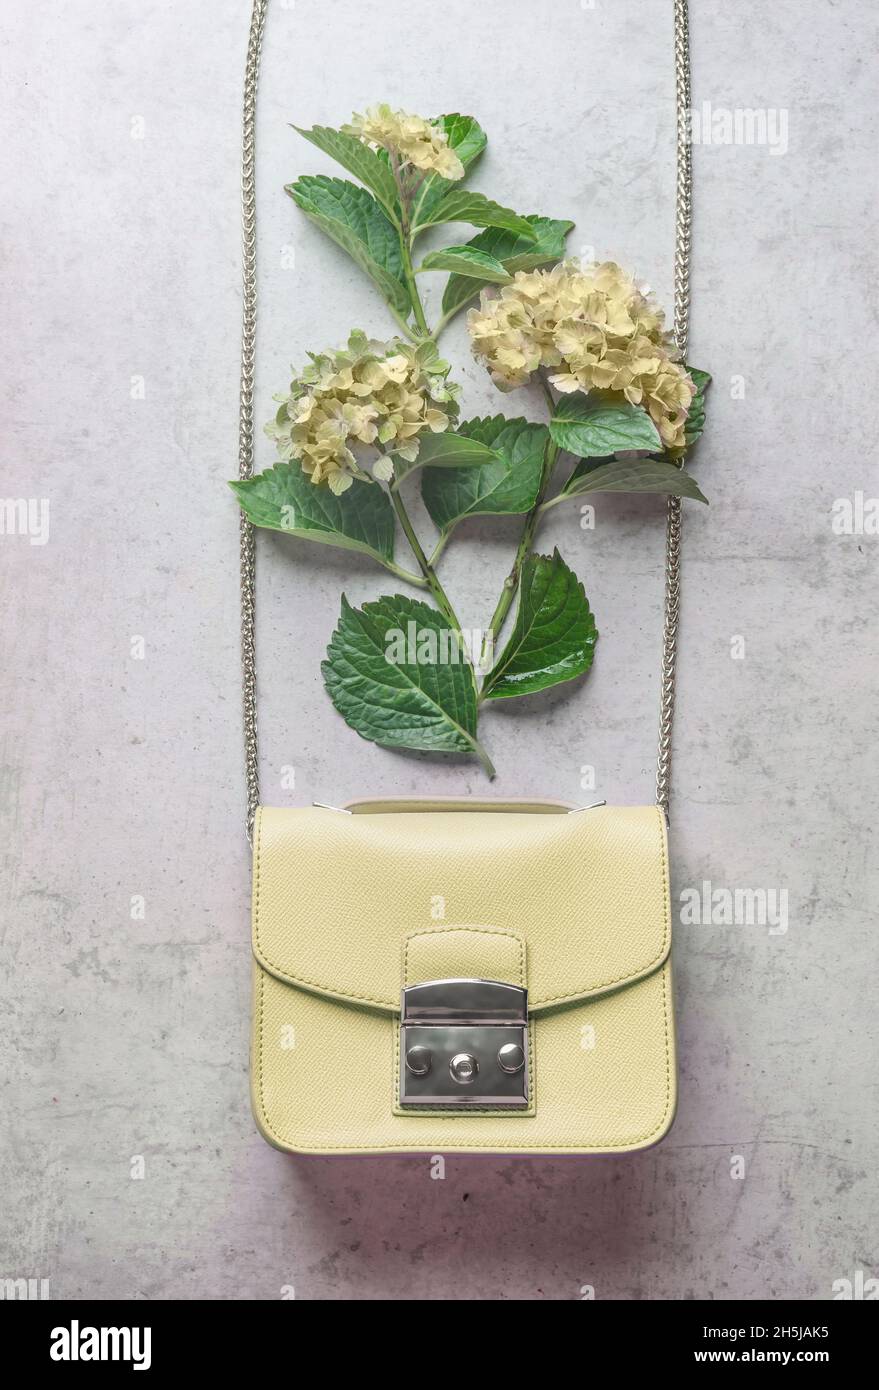 Bolsa de mano para mujer de color amarillo pálido con flores de hortensias sobre fondo gris. Concepto de moda femenina con flores. Vista superior. Foto de stock